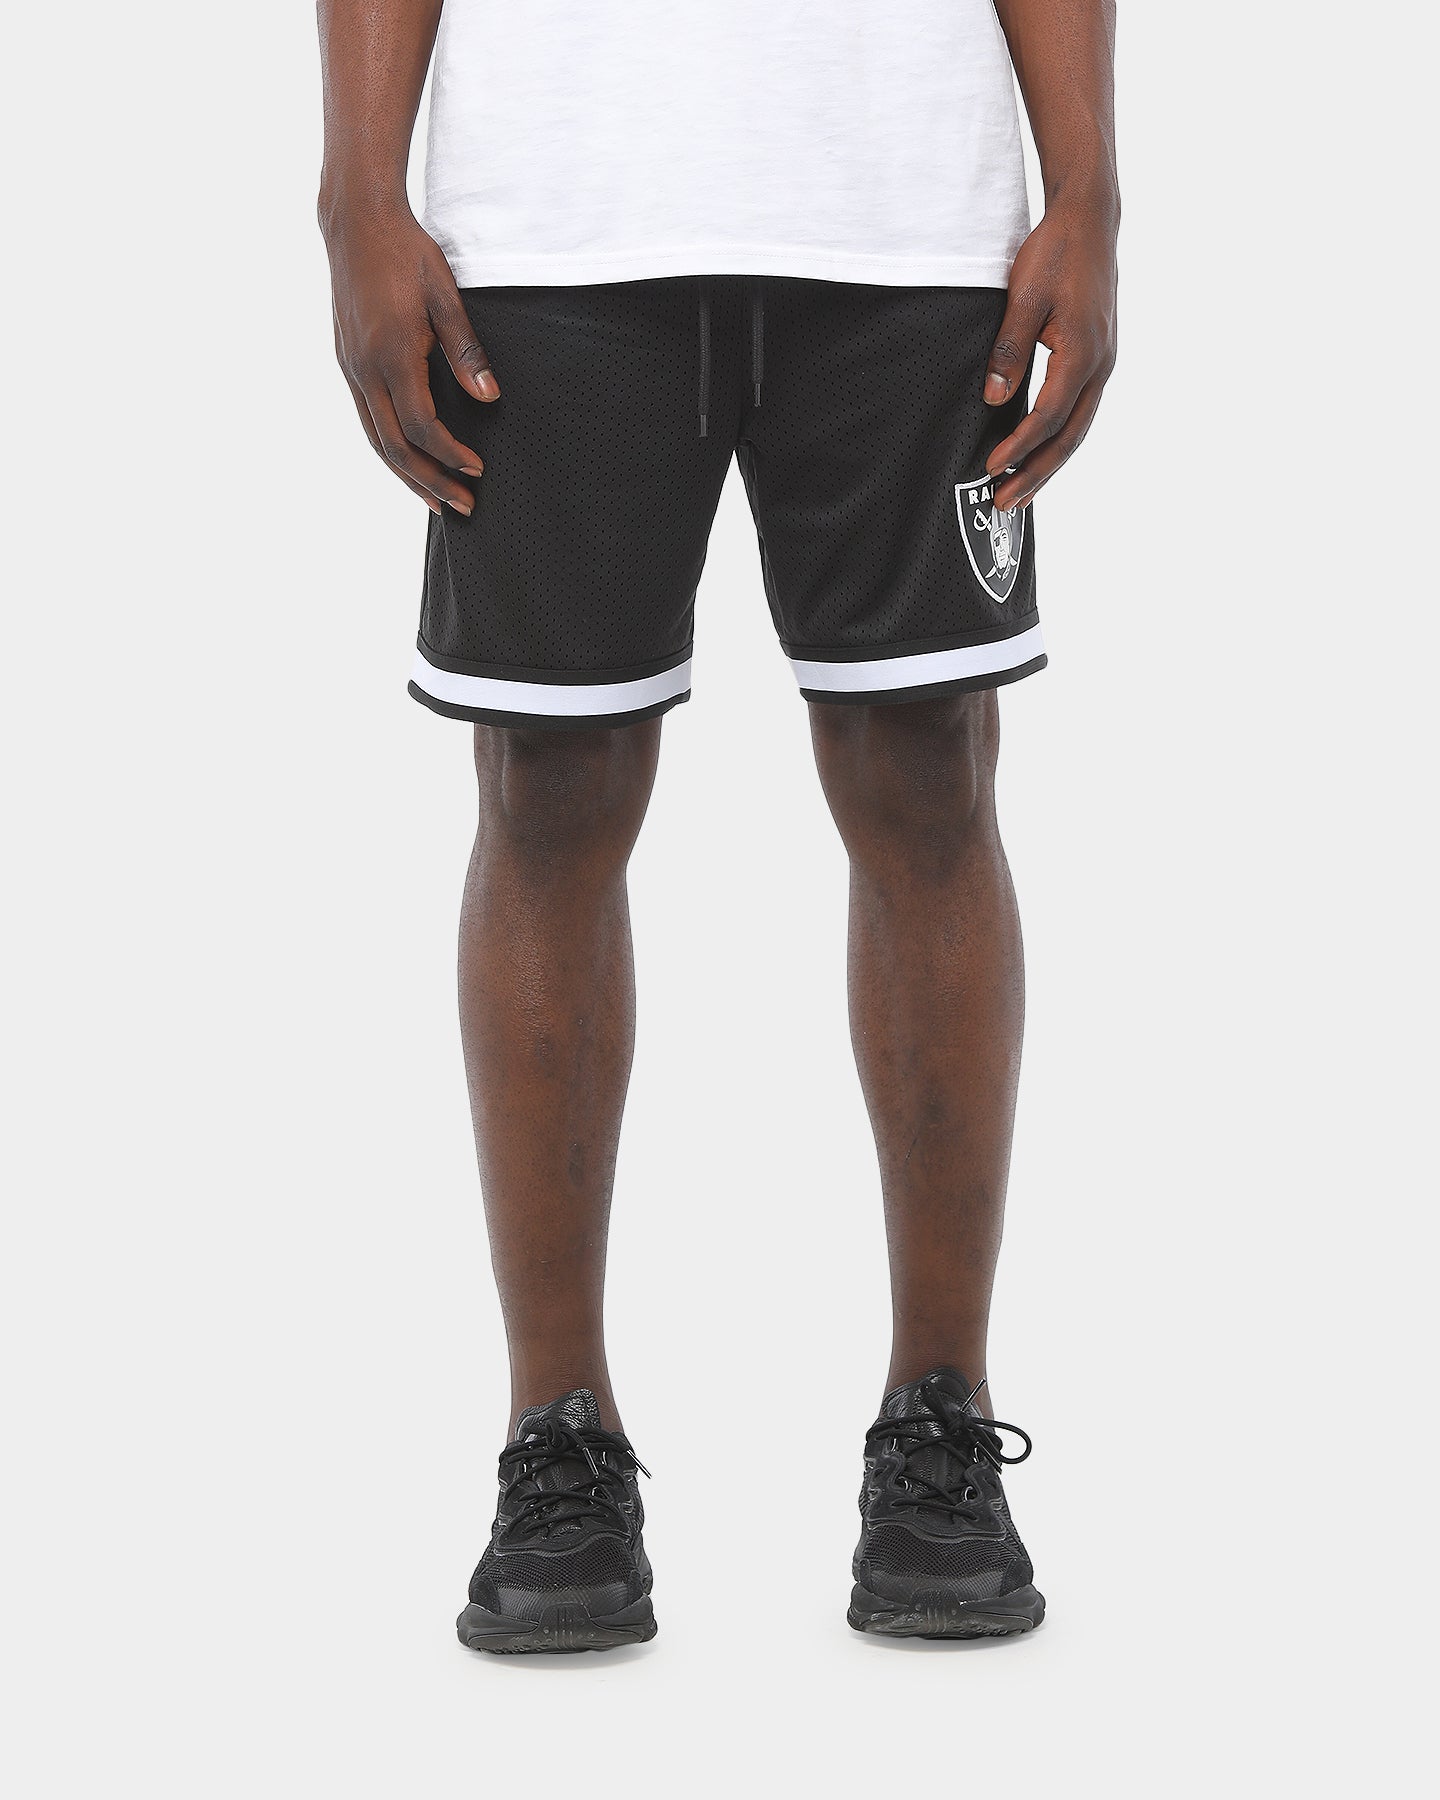 nfl basketball shorts